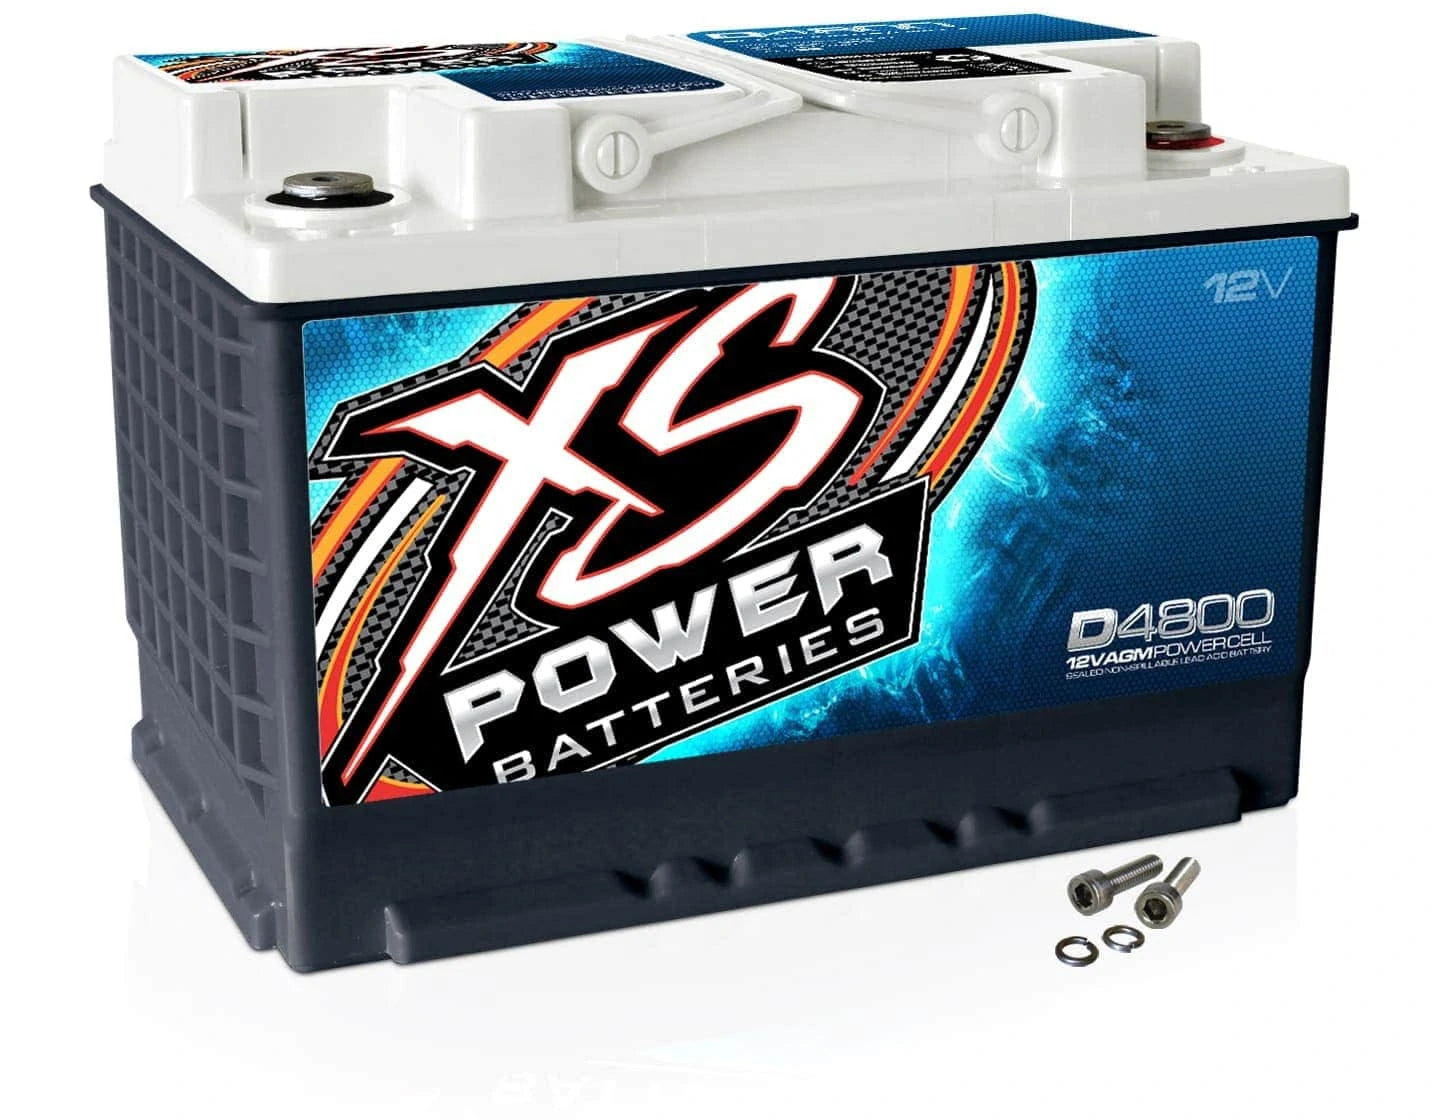 D4800 XS Power 12VDC AGM Car Audio Vehicle Battery 3000A 60Ah Group 48